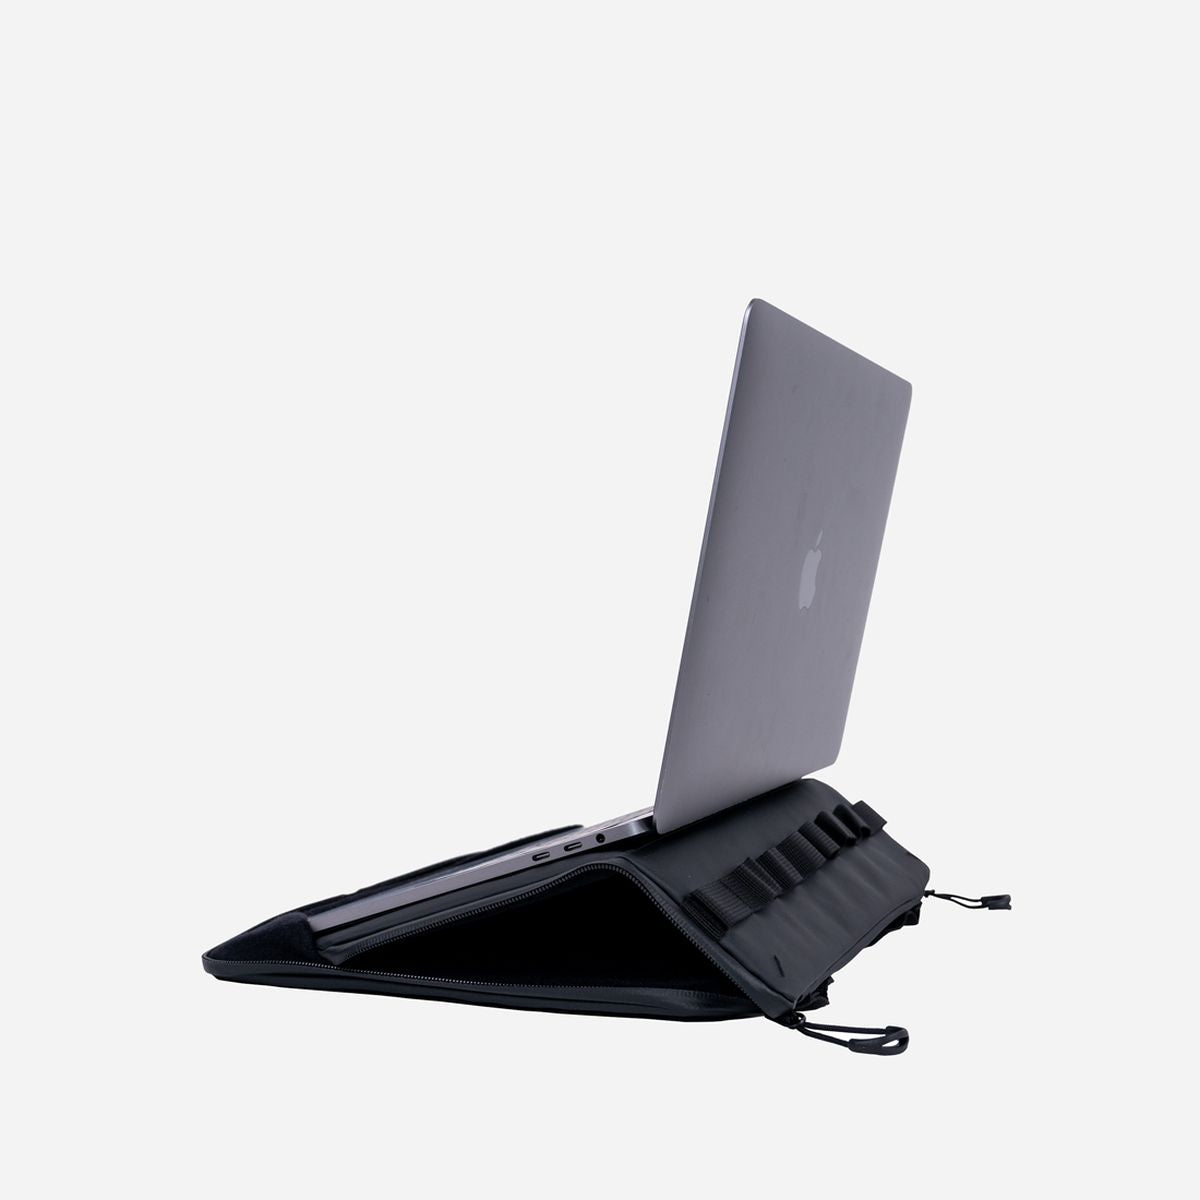 Wandrd Laptop Case 13" - Black